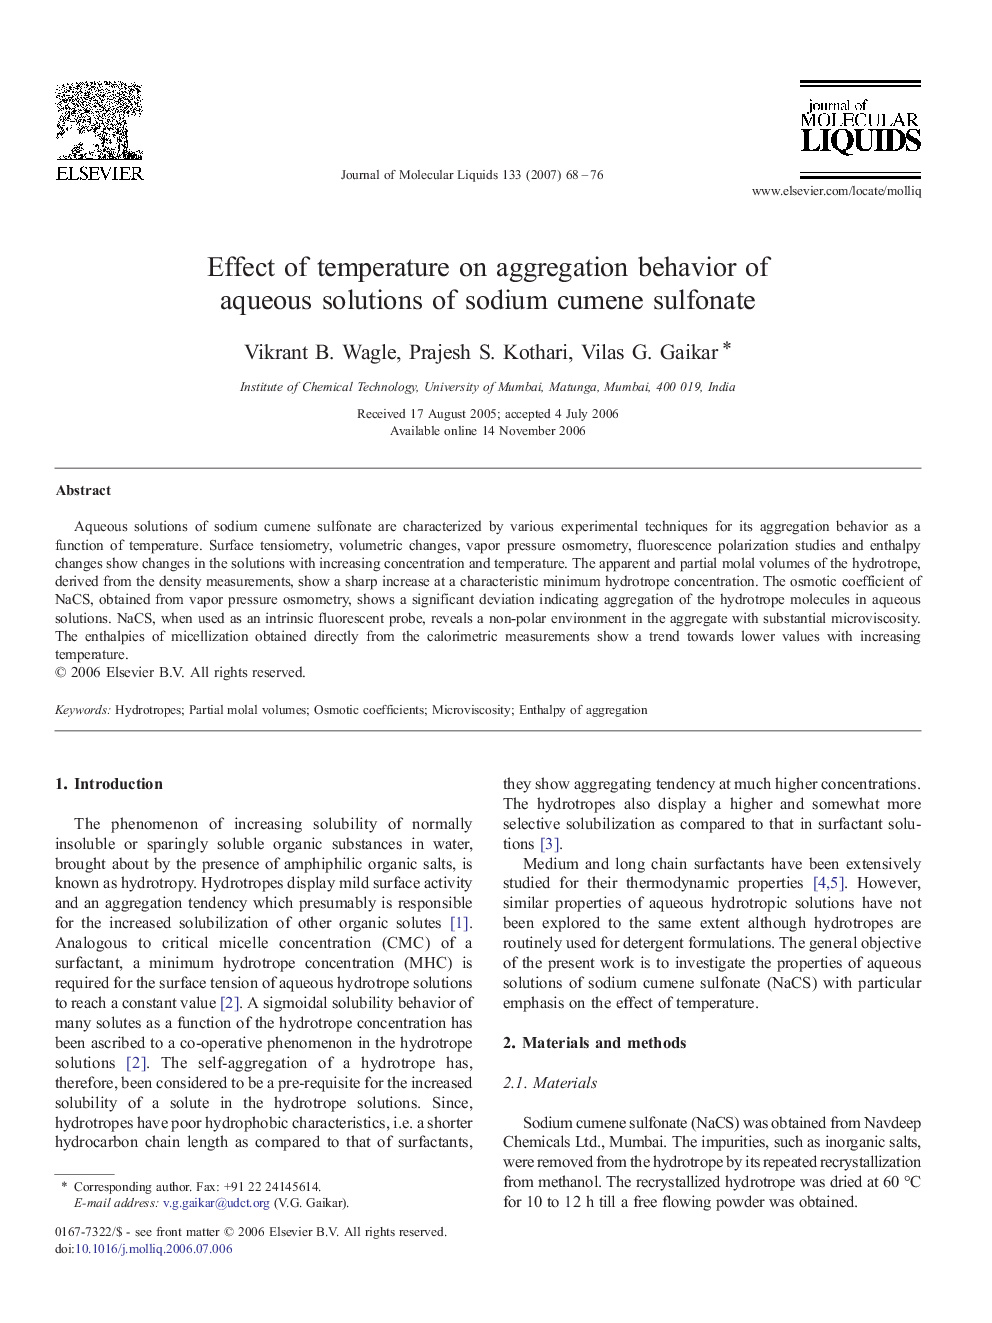 Effect of temperature on aggregation behavior of aqueous solutions of sodium cumene sulfonate